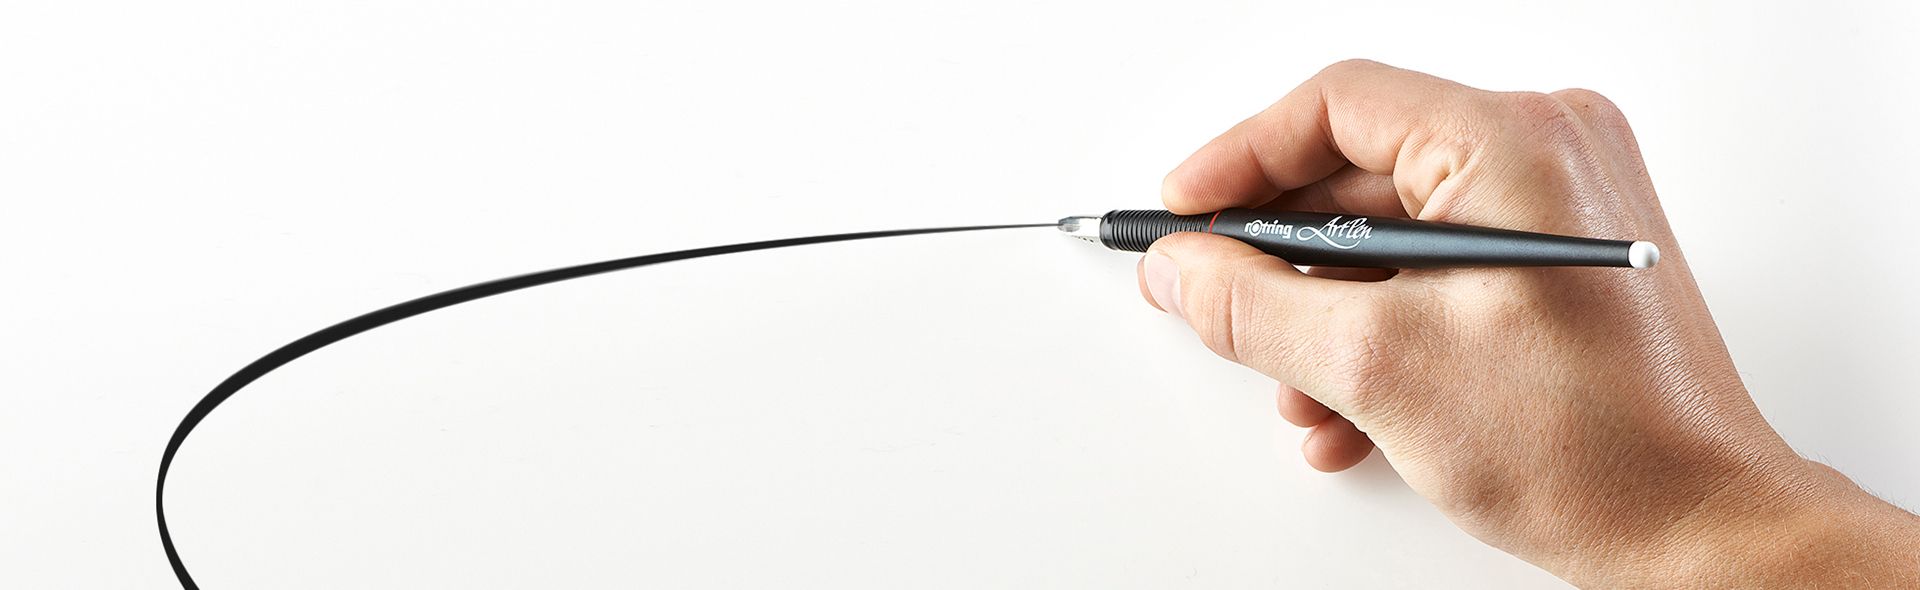 Pilot Parallel Pen - 3.8mm nib width – Pen Pusher